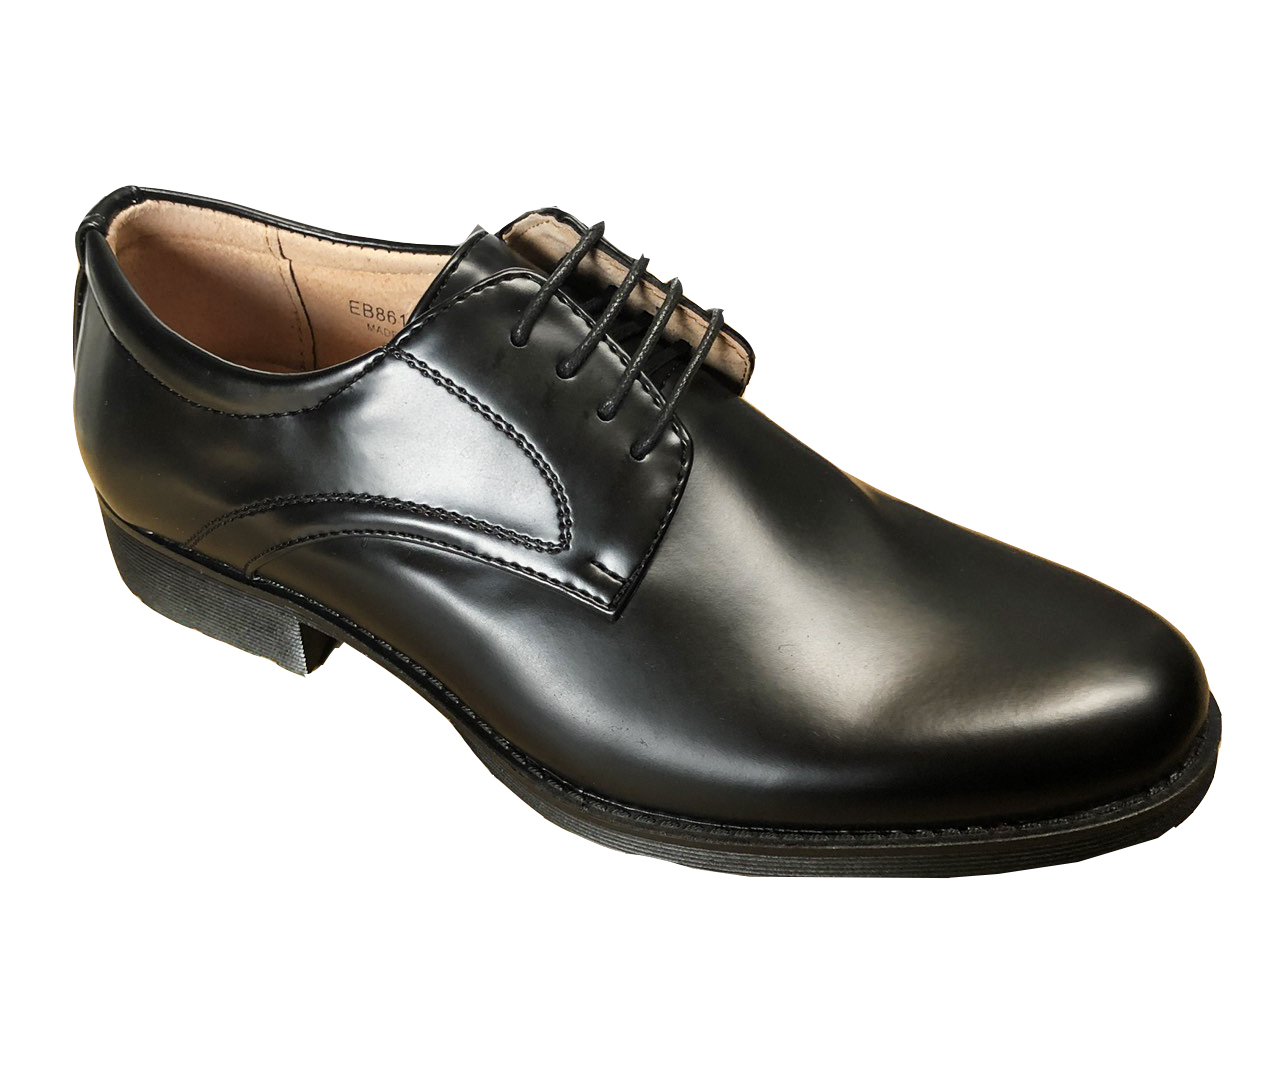 EB8612 學生皮鞋, 黑色-27.5cm, large